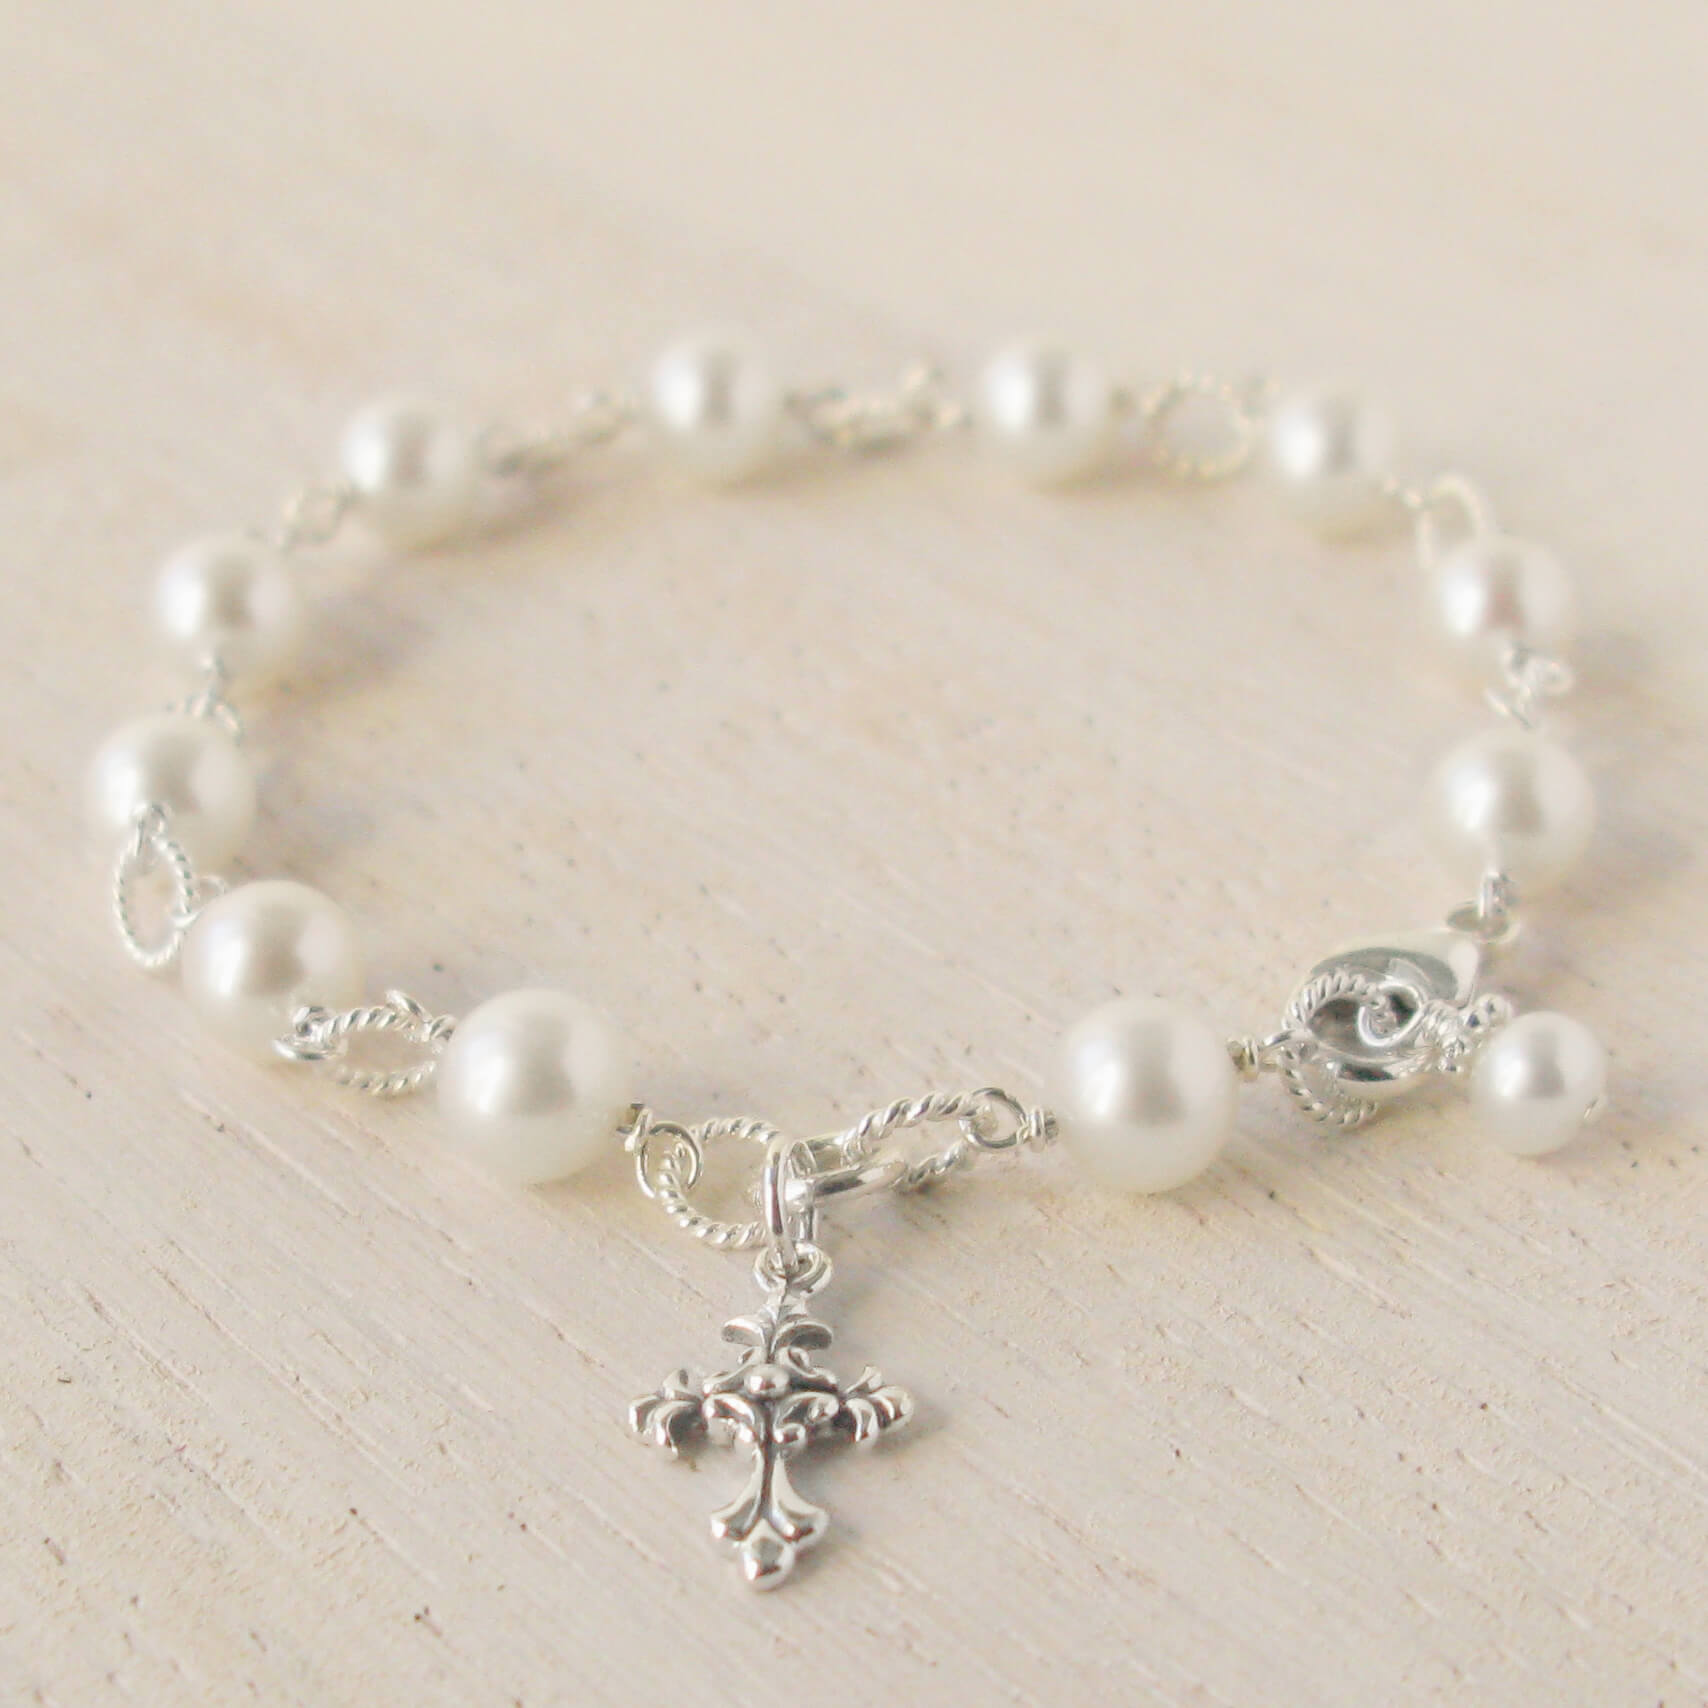 Benefits of a catholic rosary bracelet - Beautiful Handmade Rosary Bracelets